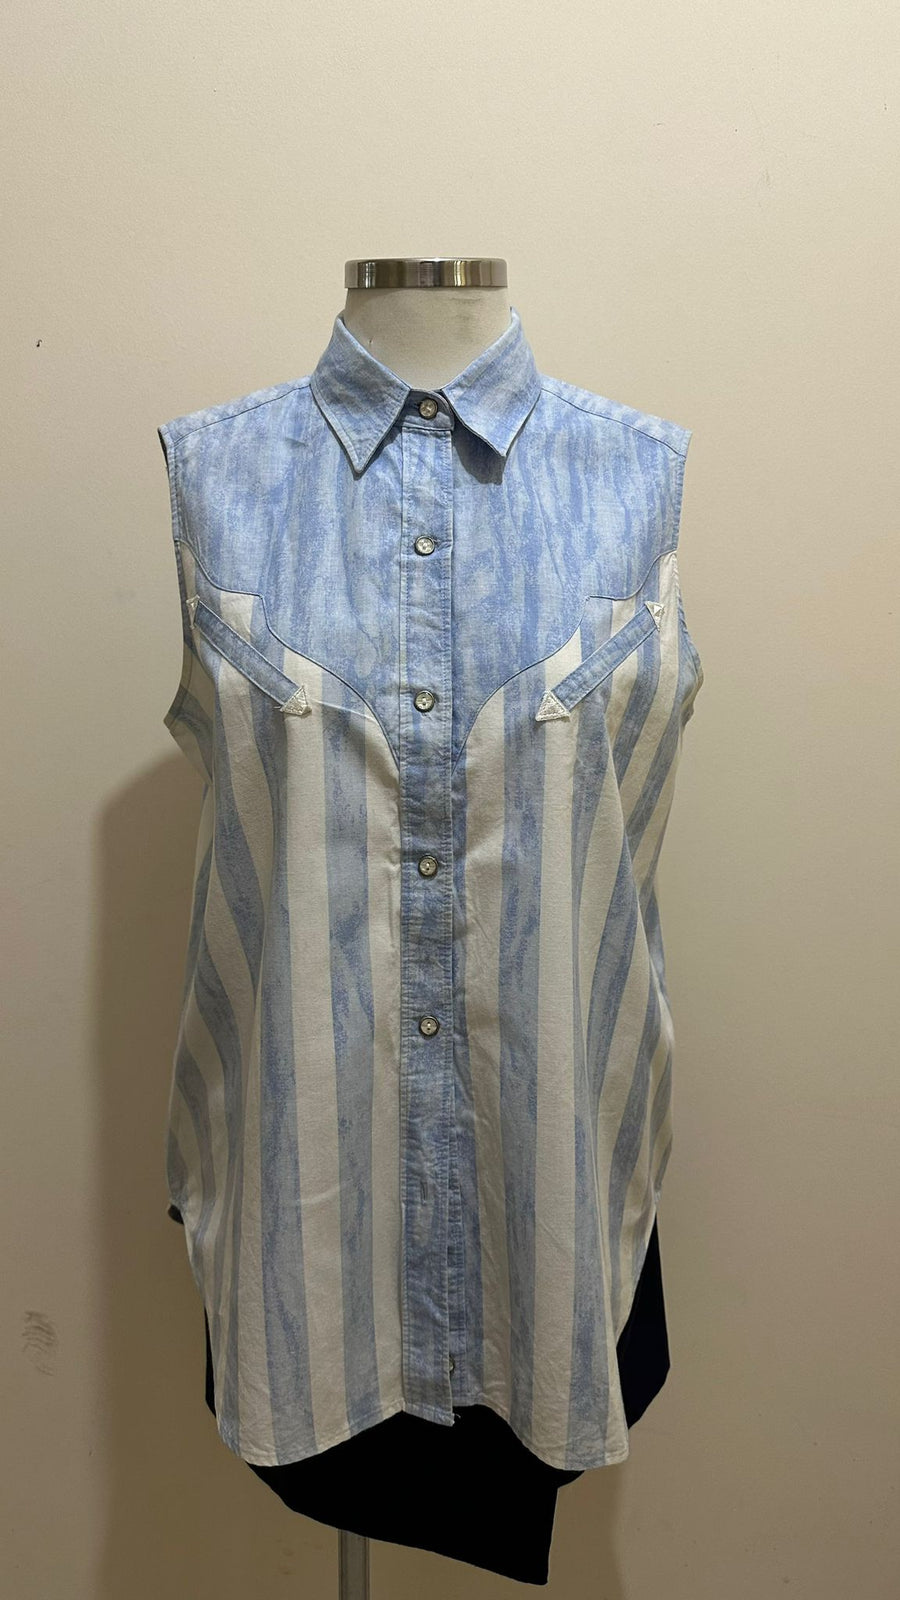 Vintage Sleeveless Cotton Shirt